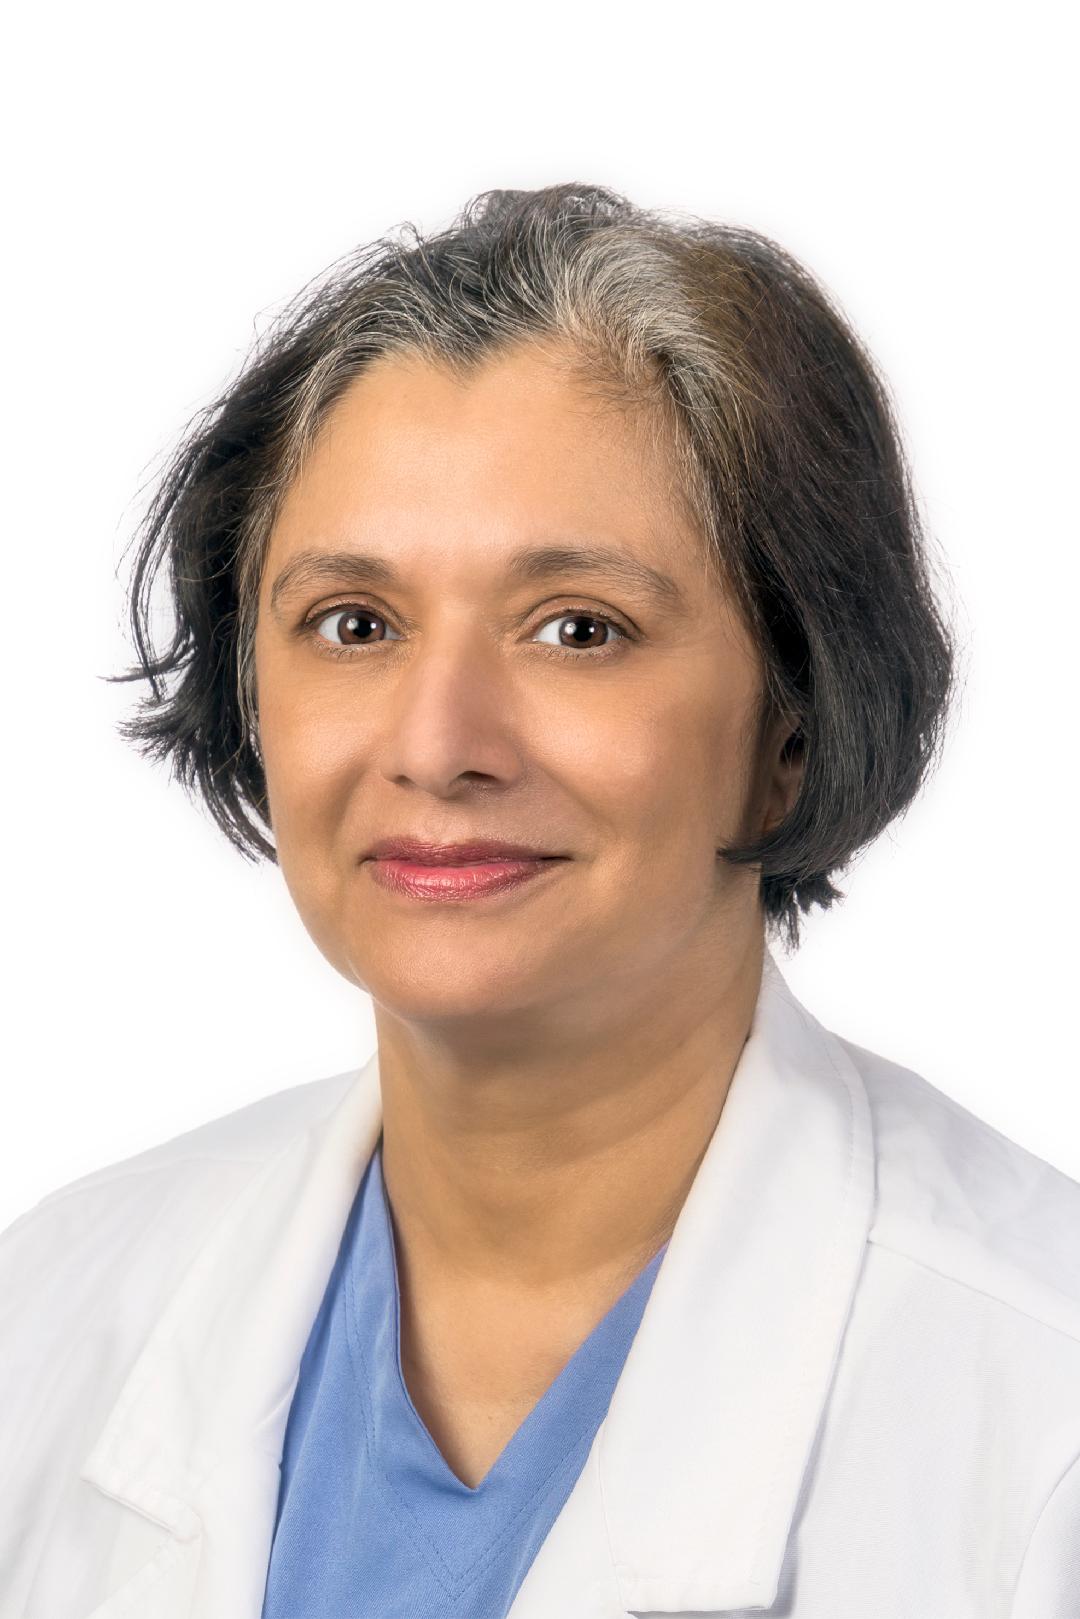 Surgeon Licensee — Catherine Mathis, M.D. in Stockton, CA